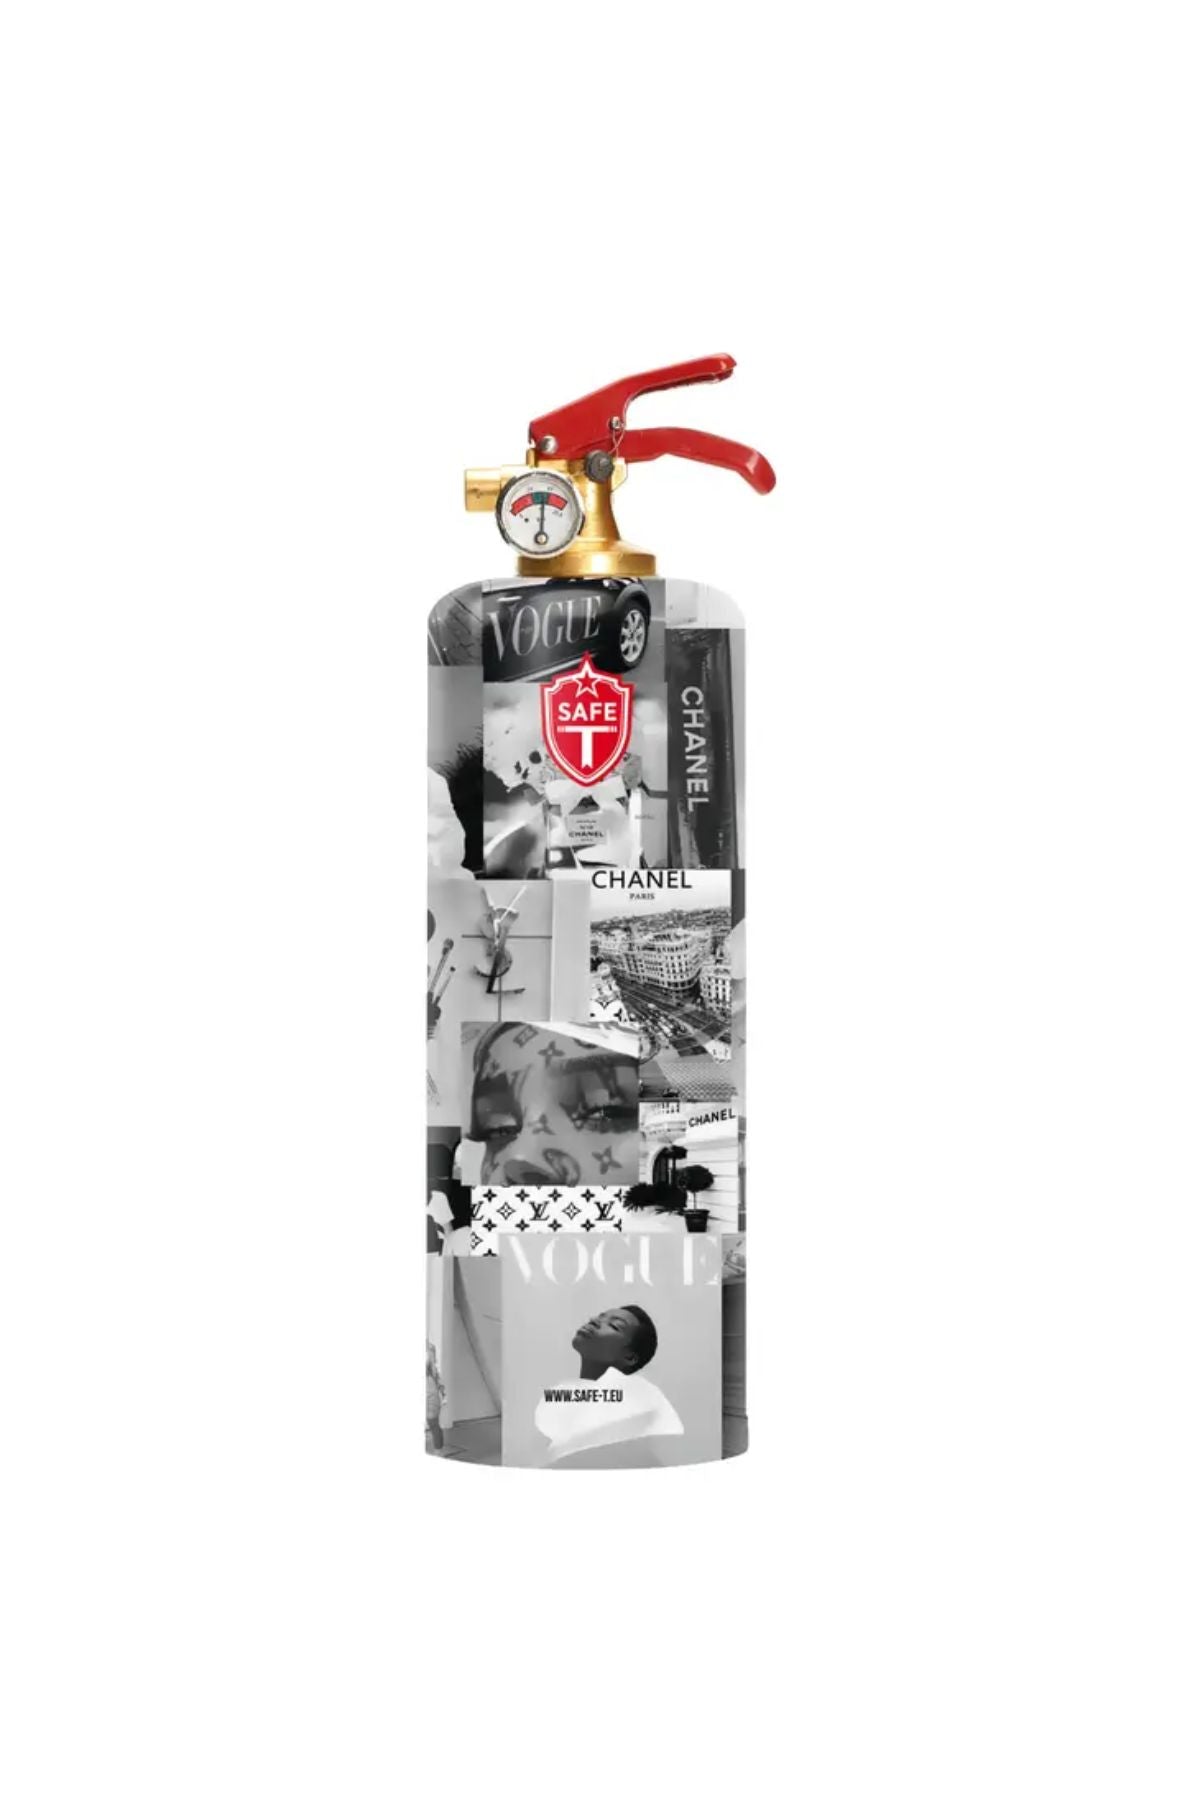 Designer fire extinguisher